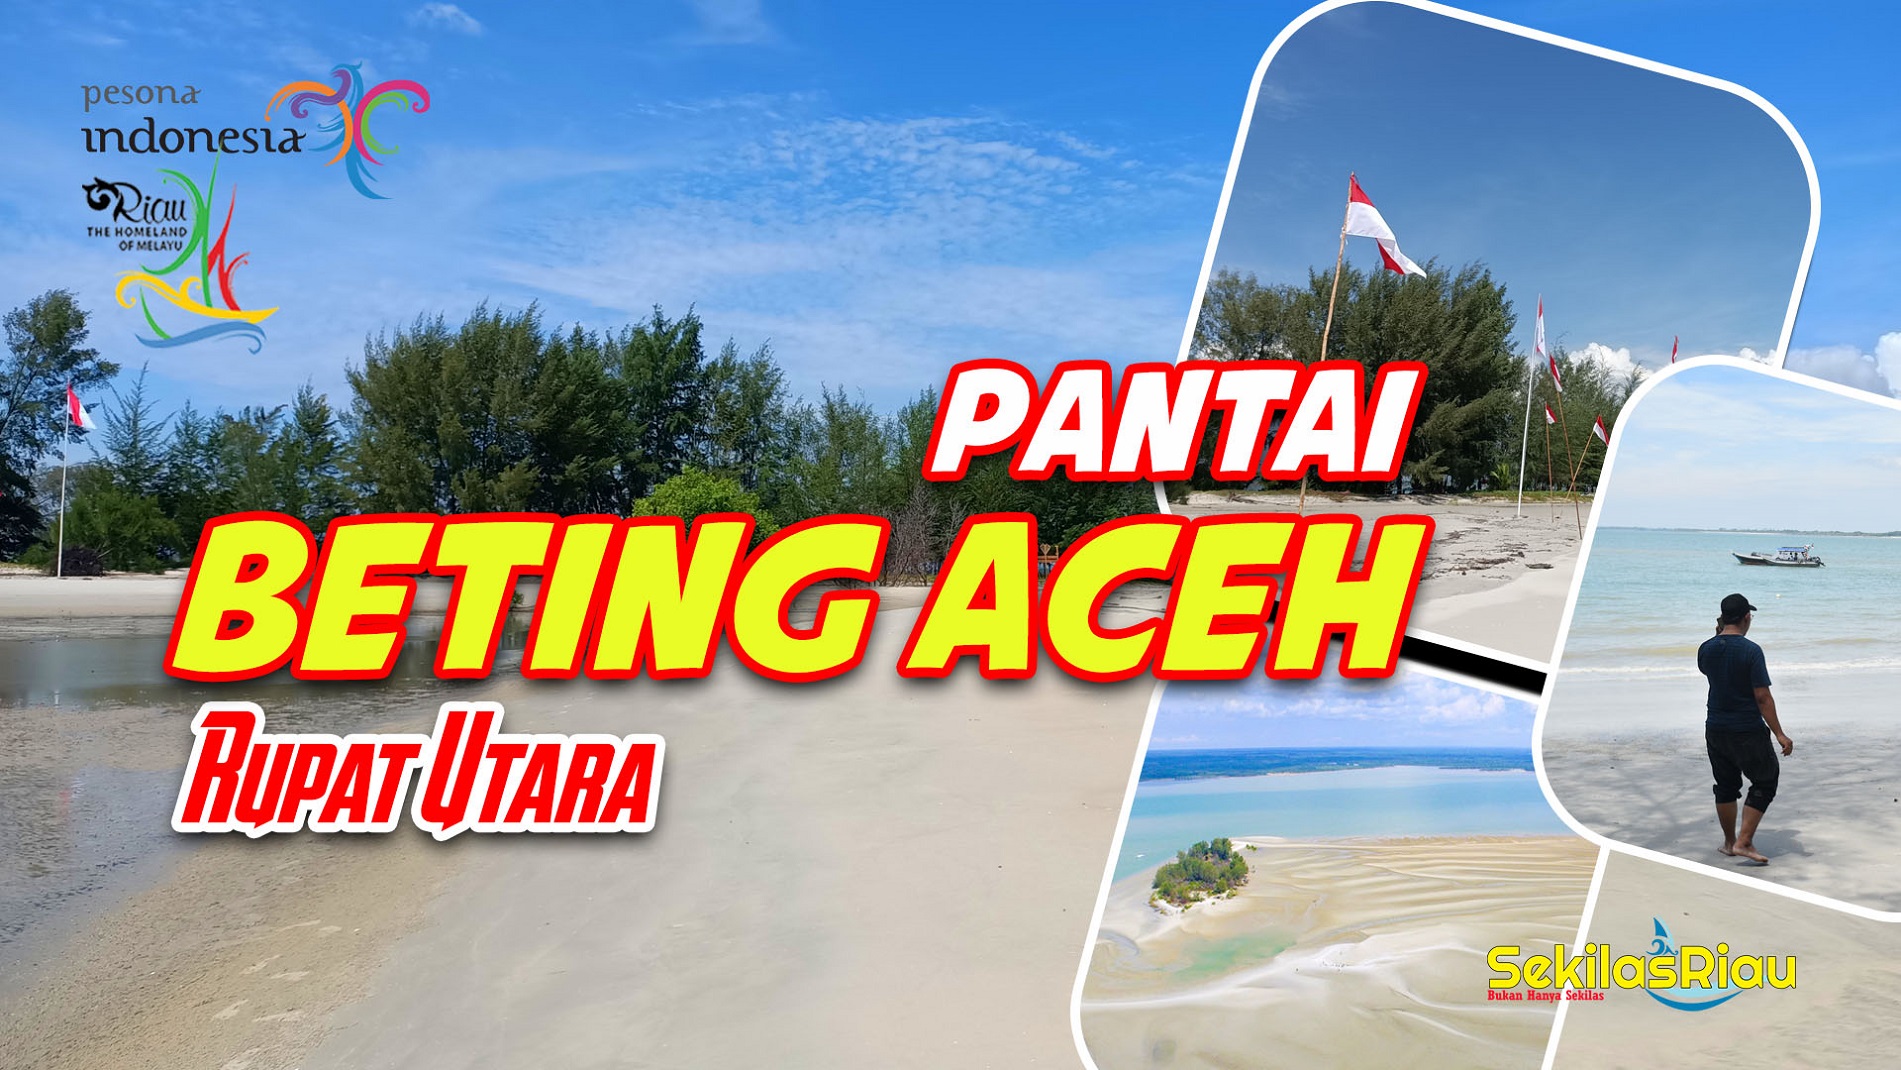 Pantai Beting Aceh